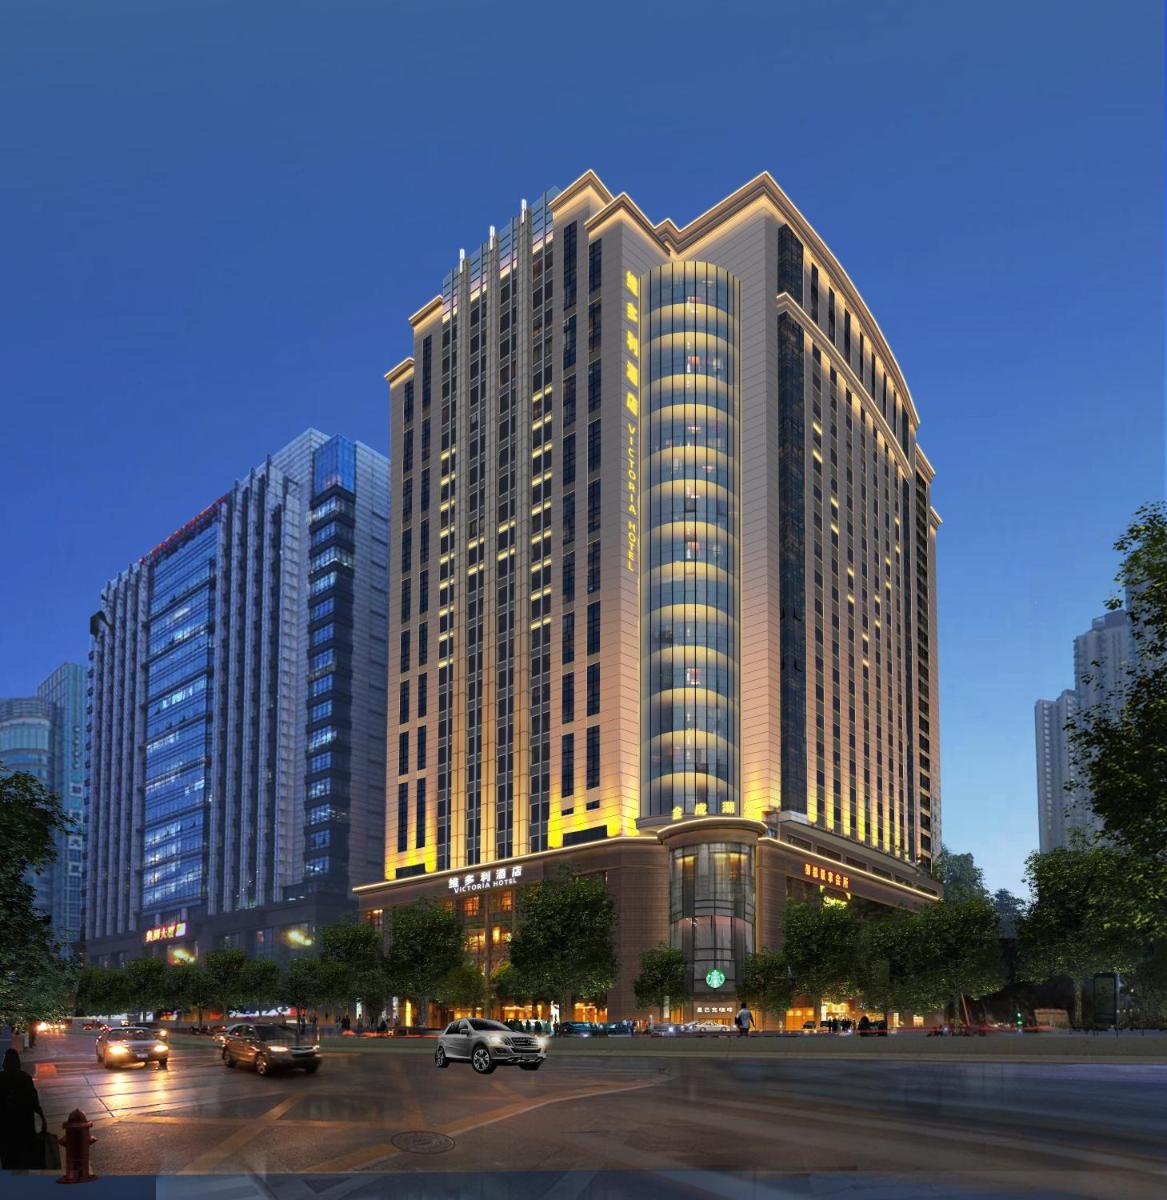 Guangzhou Victoria Hotel - Housity